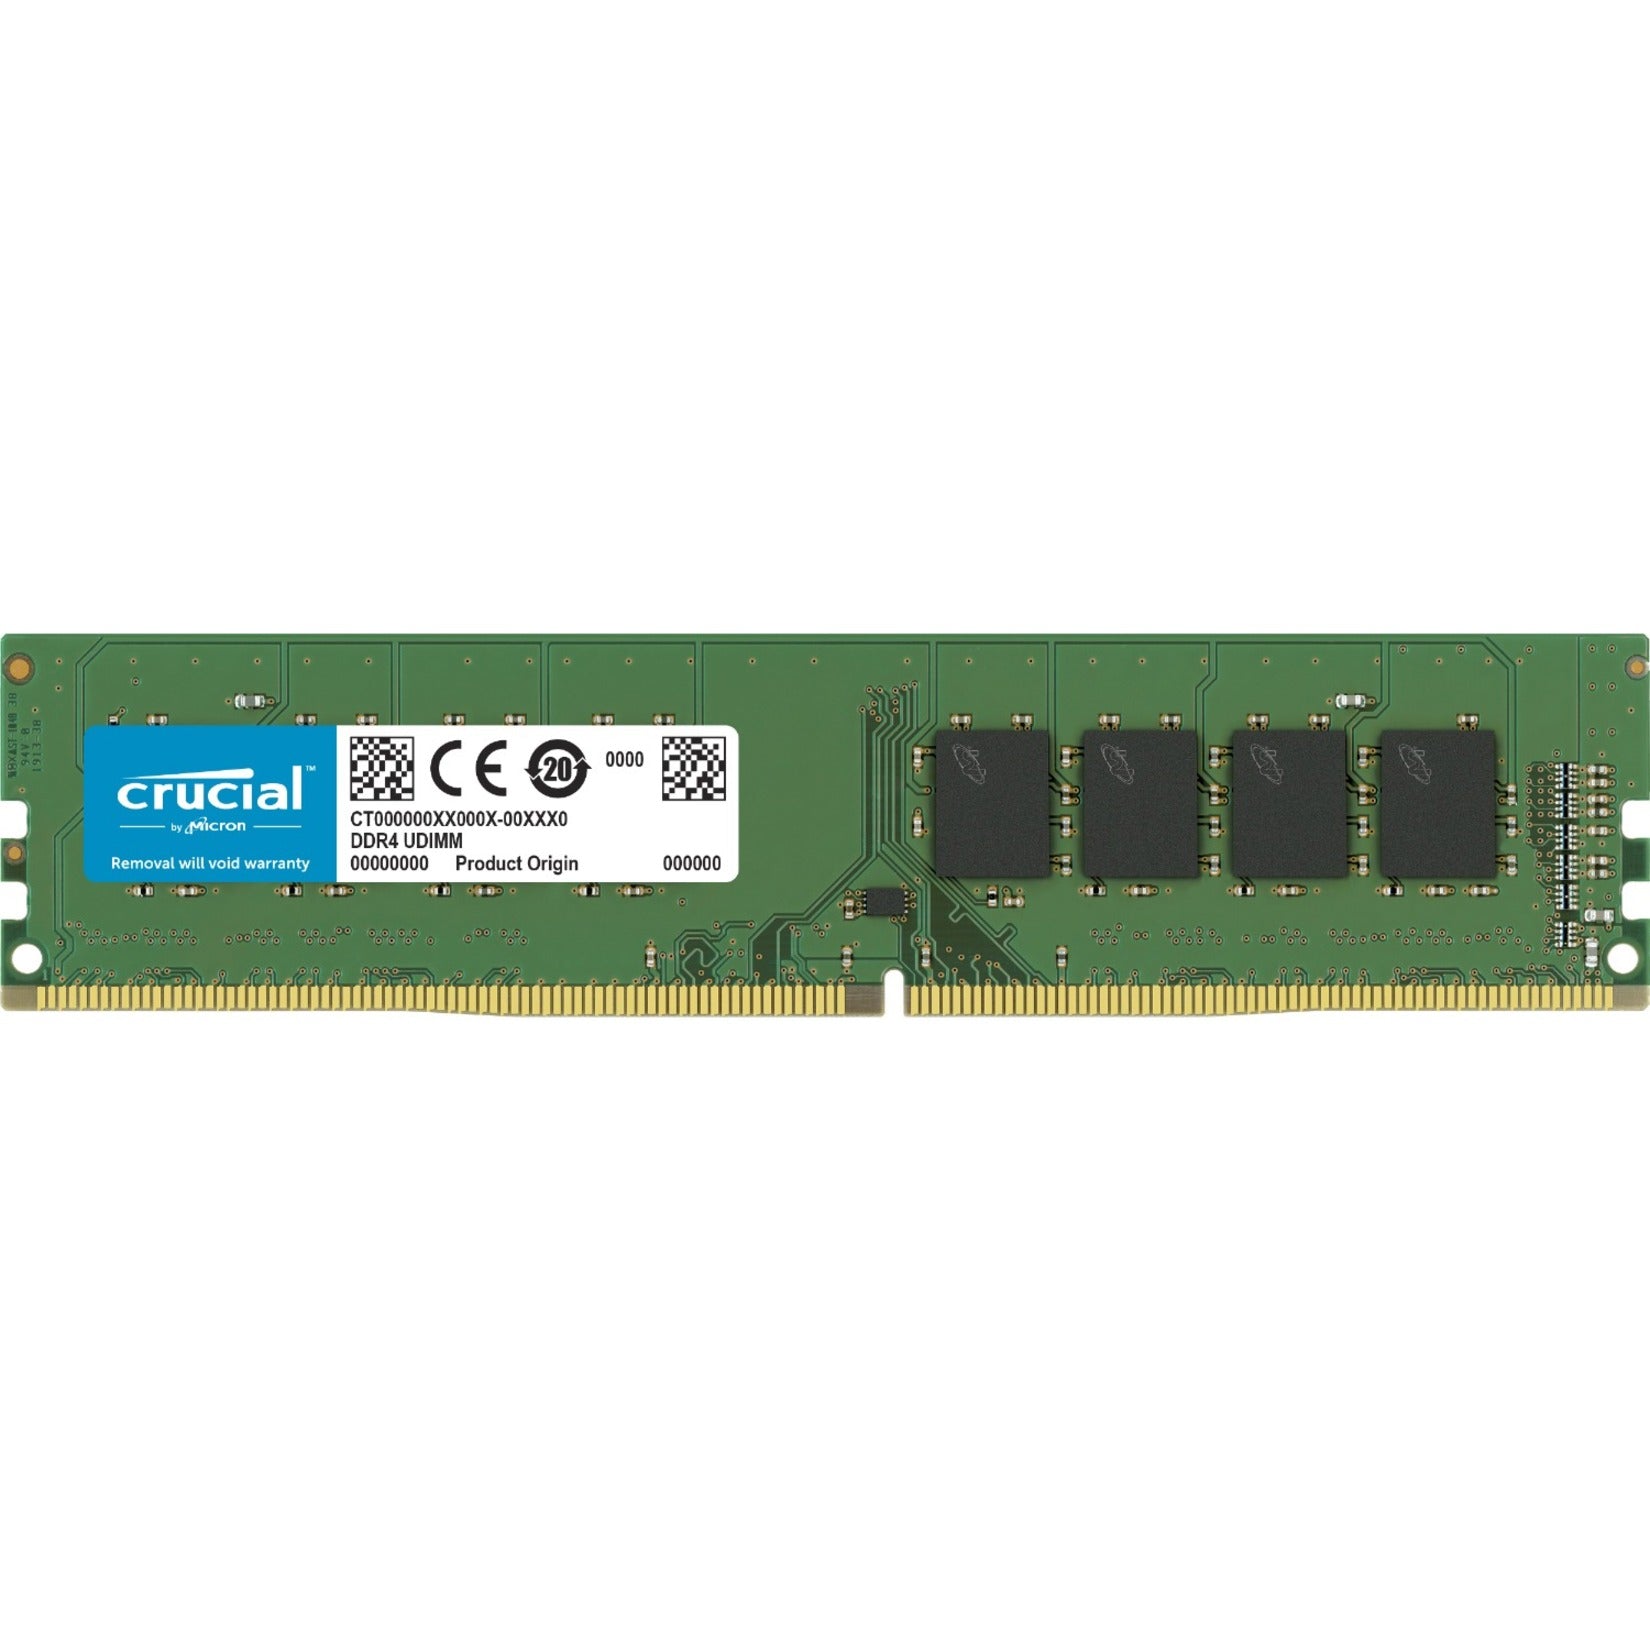 Crucial CT16G4DFRA266 16GB DDR4 SDRAM Memory Module, High Performance RAM for Desktop PC